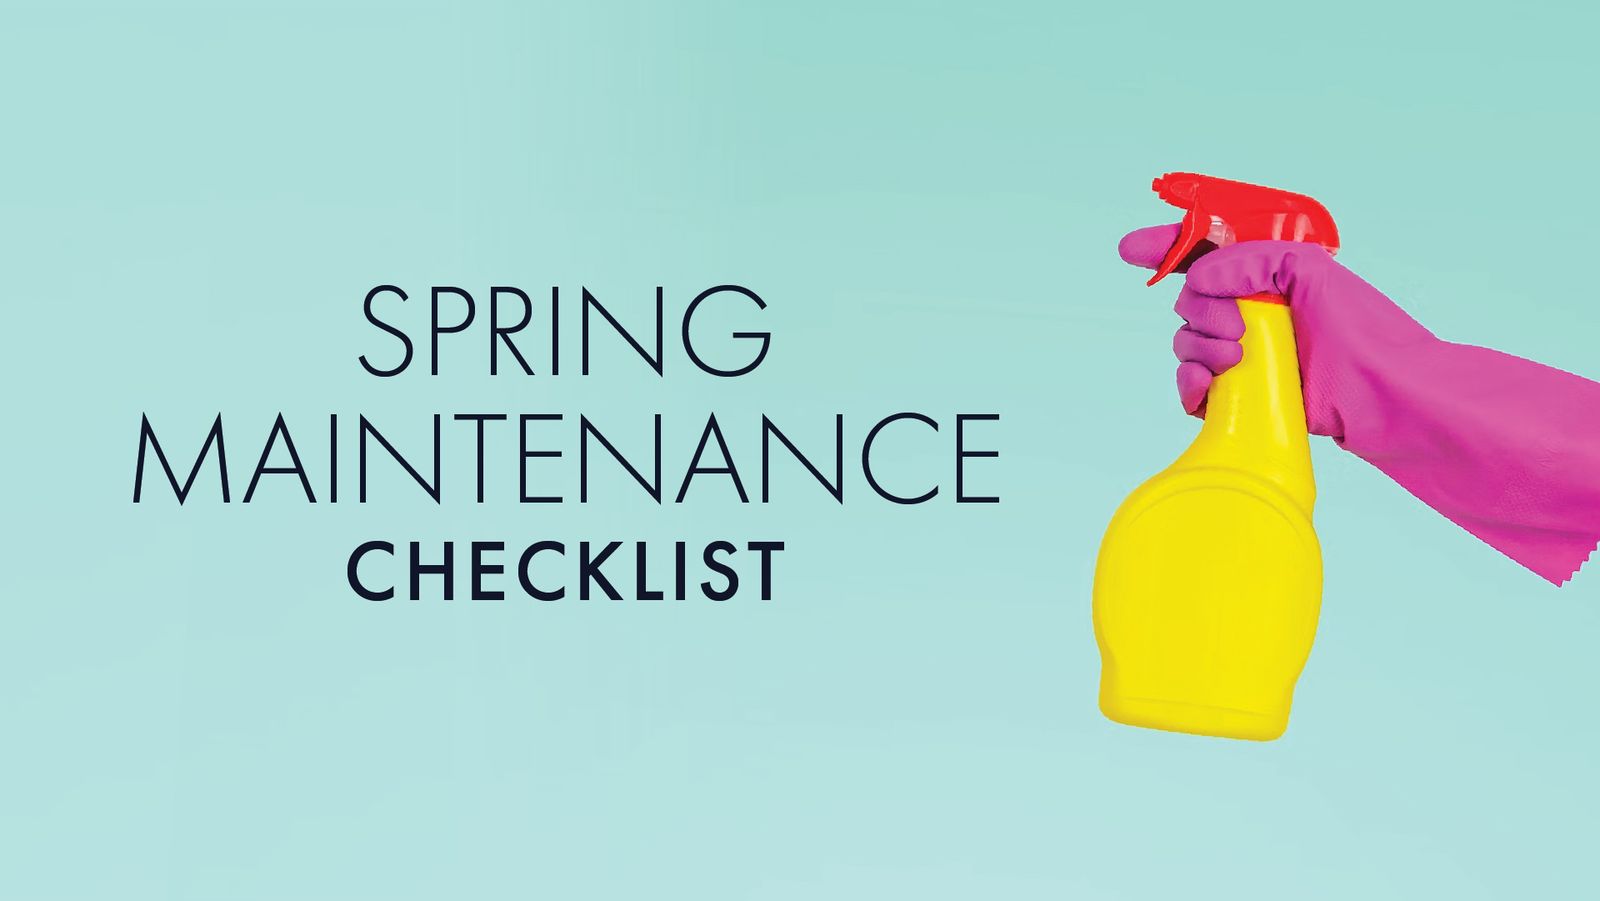 Your Spring Maintenance Checklist